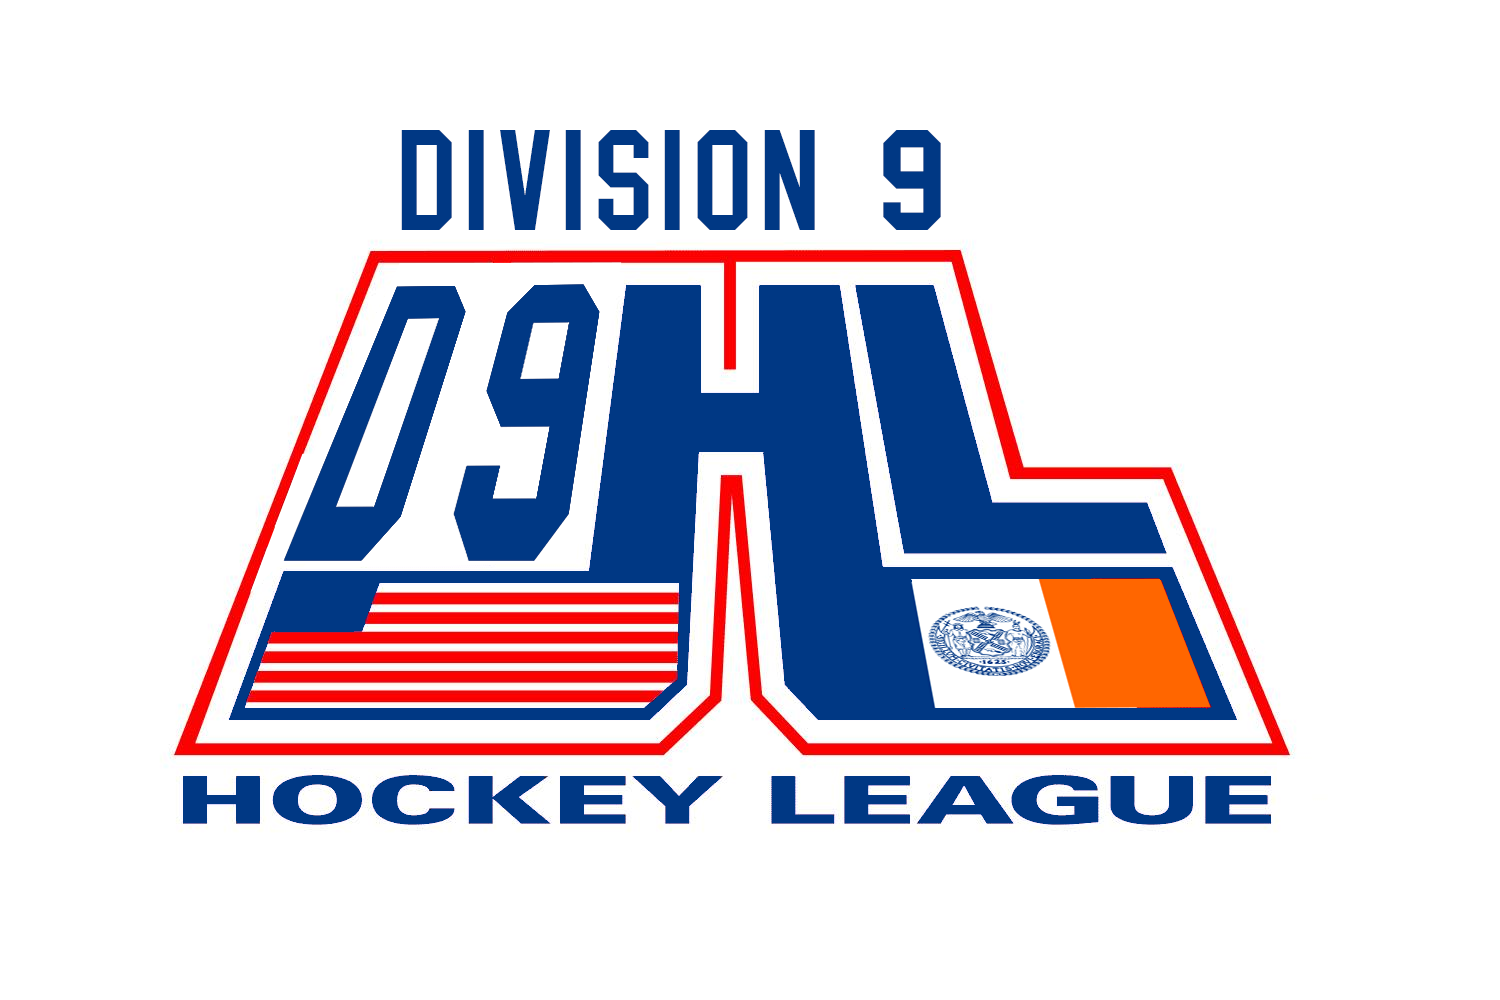 Division 9 Hockey League NYC